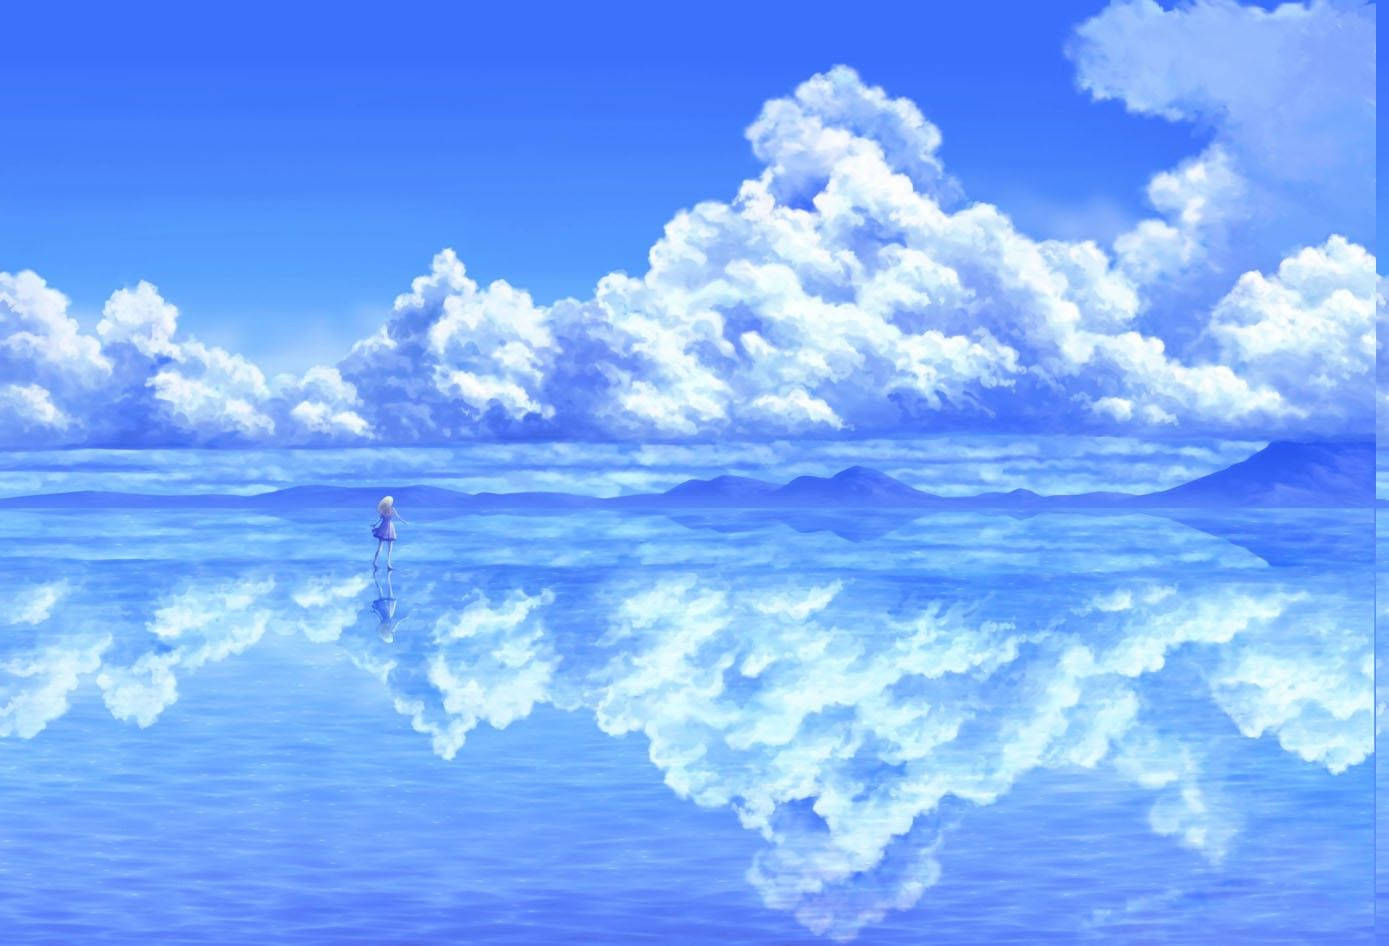 Download free Anime Landscape Sea Of Clouds Wallpaper - MrWallpaper.com